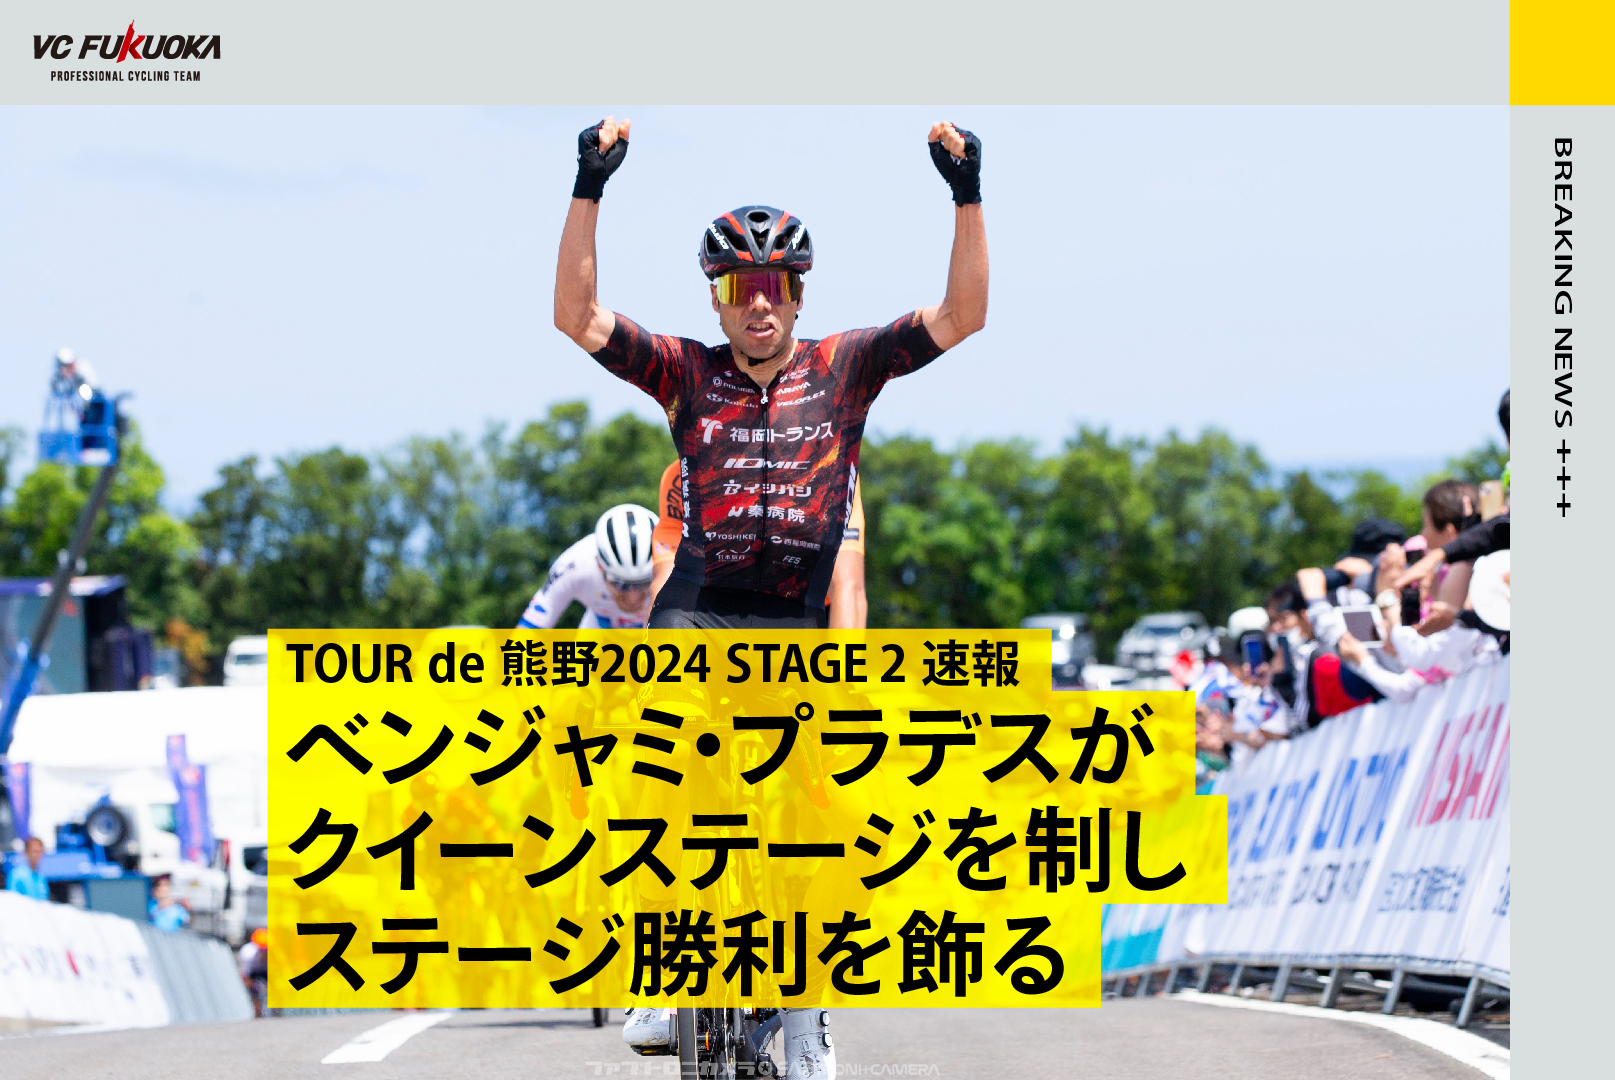 5/11 TOUR de 熊野2024 STAGE 2 速報 – ベンジャミ・プラデスが クイーンステージを制し ステージ勝利を飾る